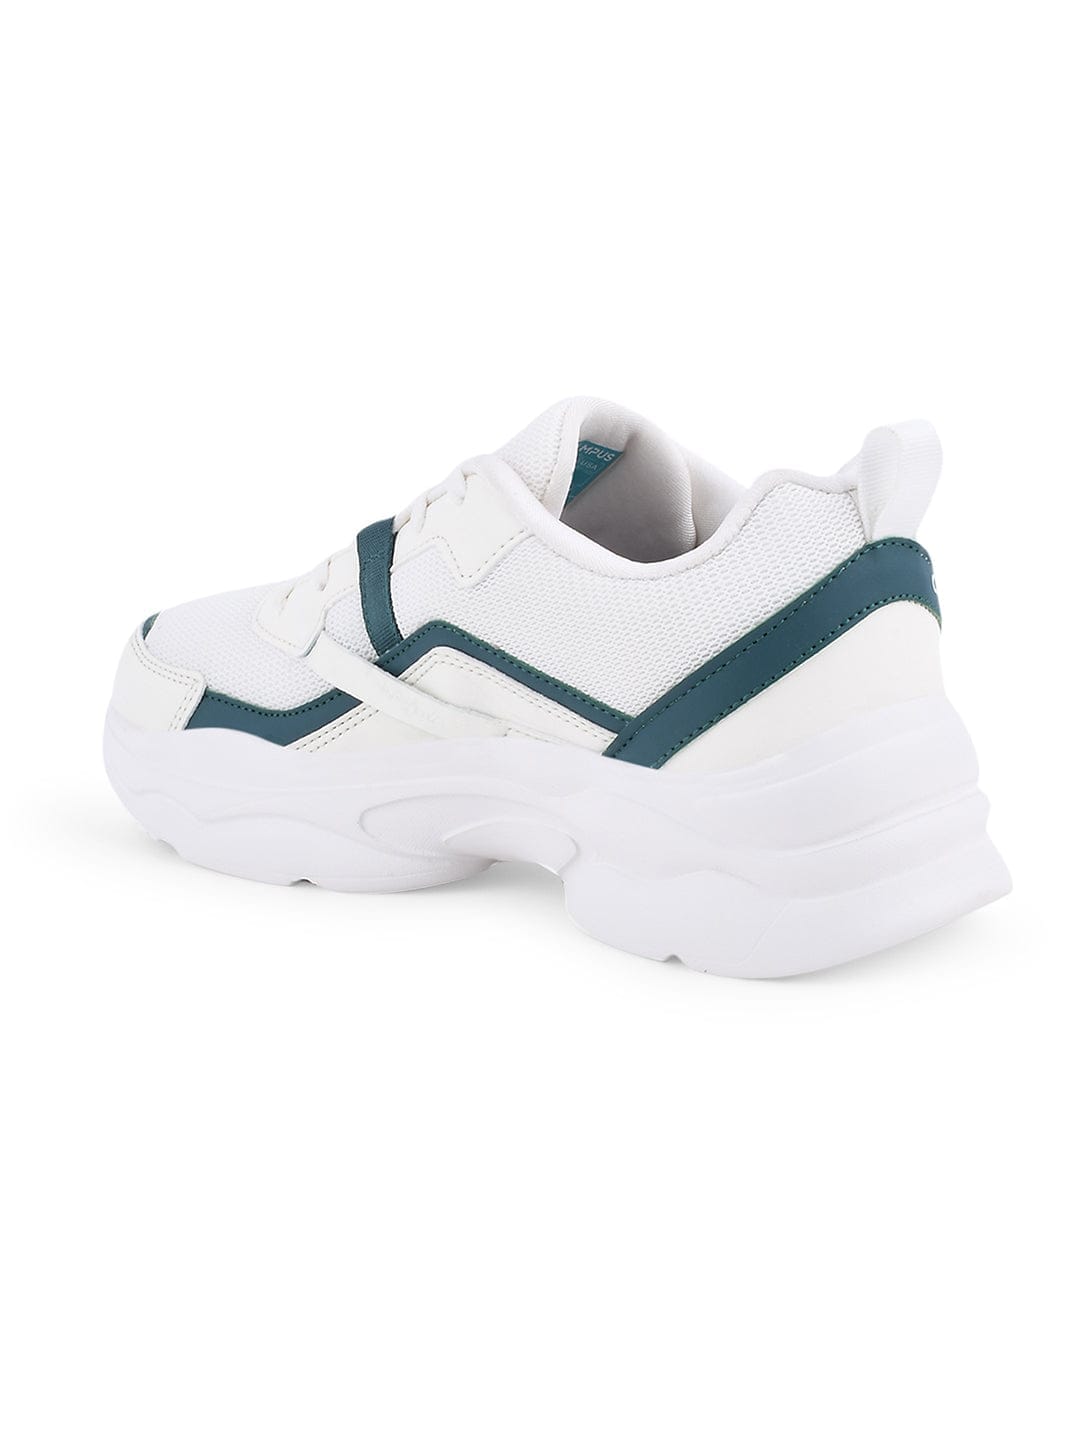 2019 Nike Air Max Plus Clear/White Running Shoes AR0970-002 Women 9 | eBay